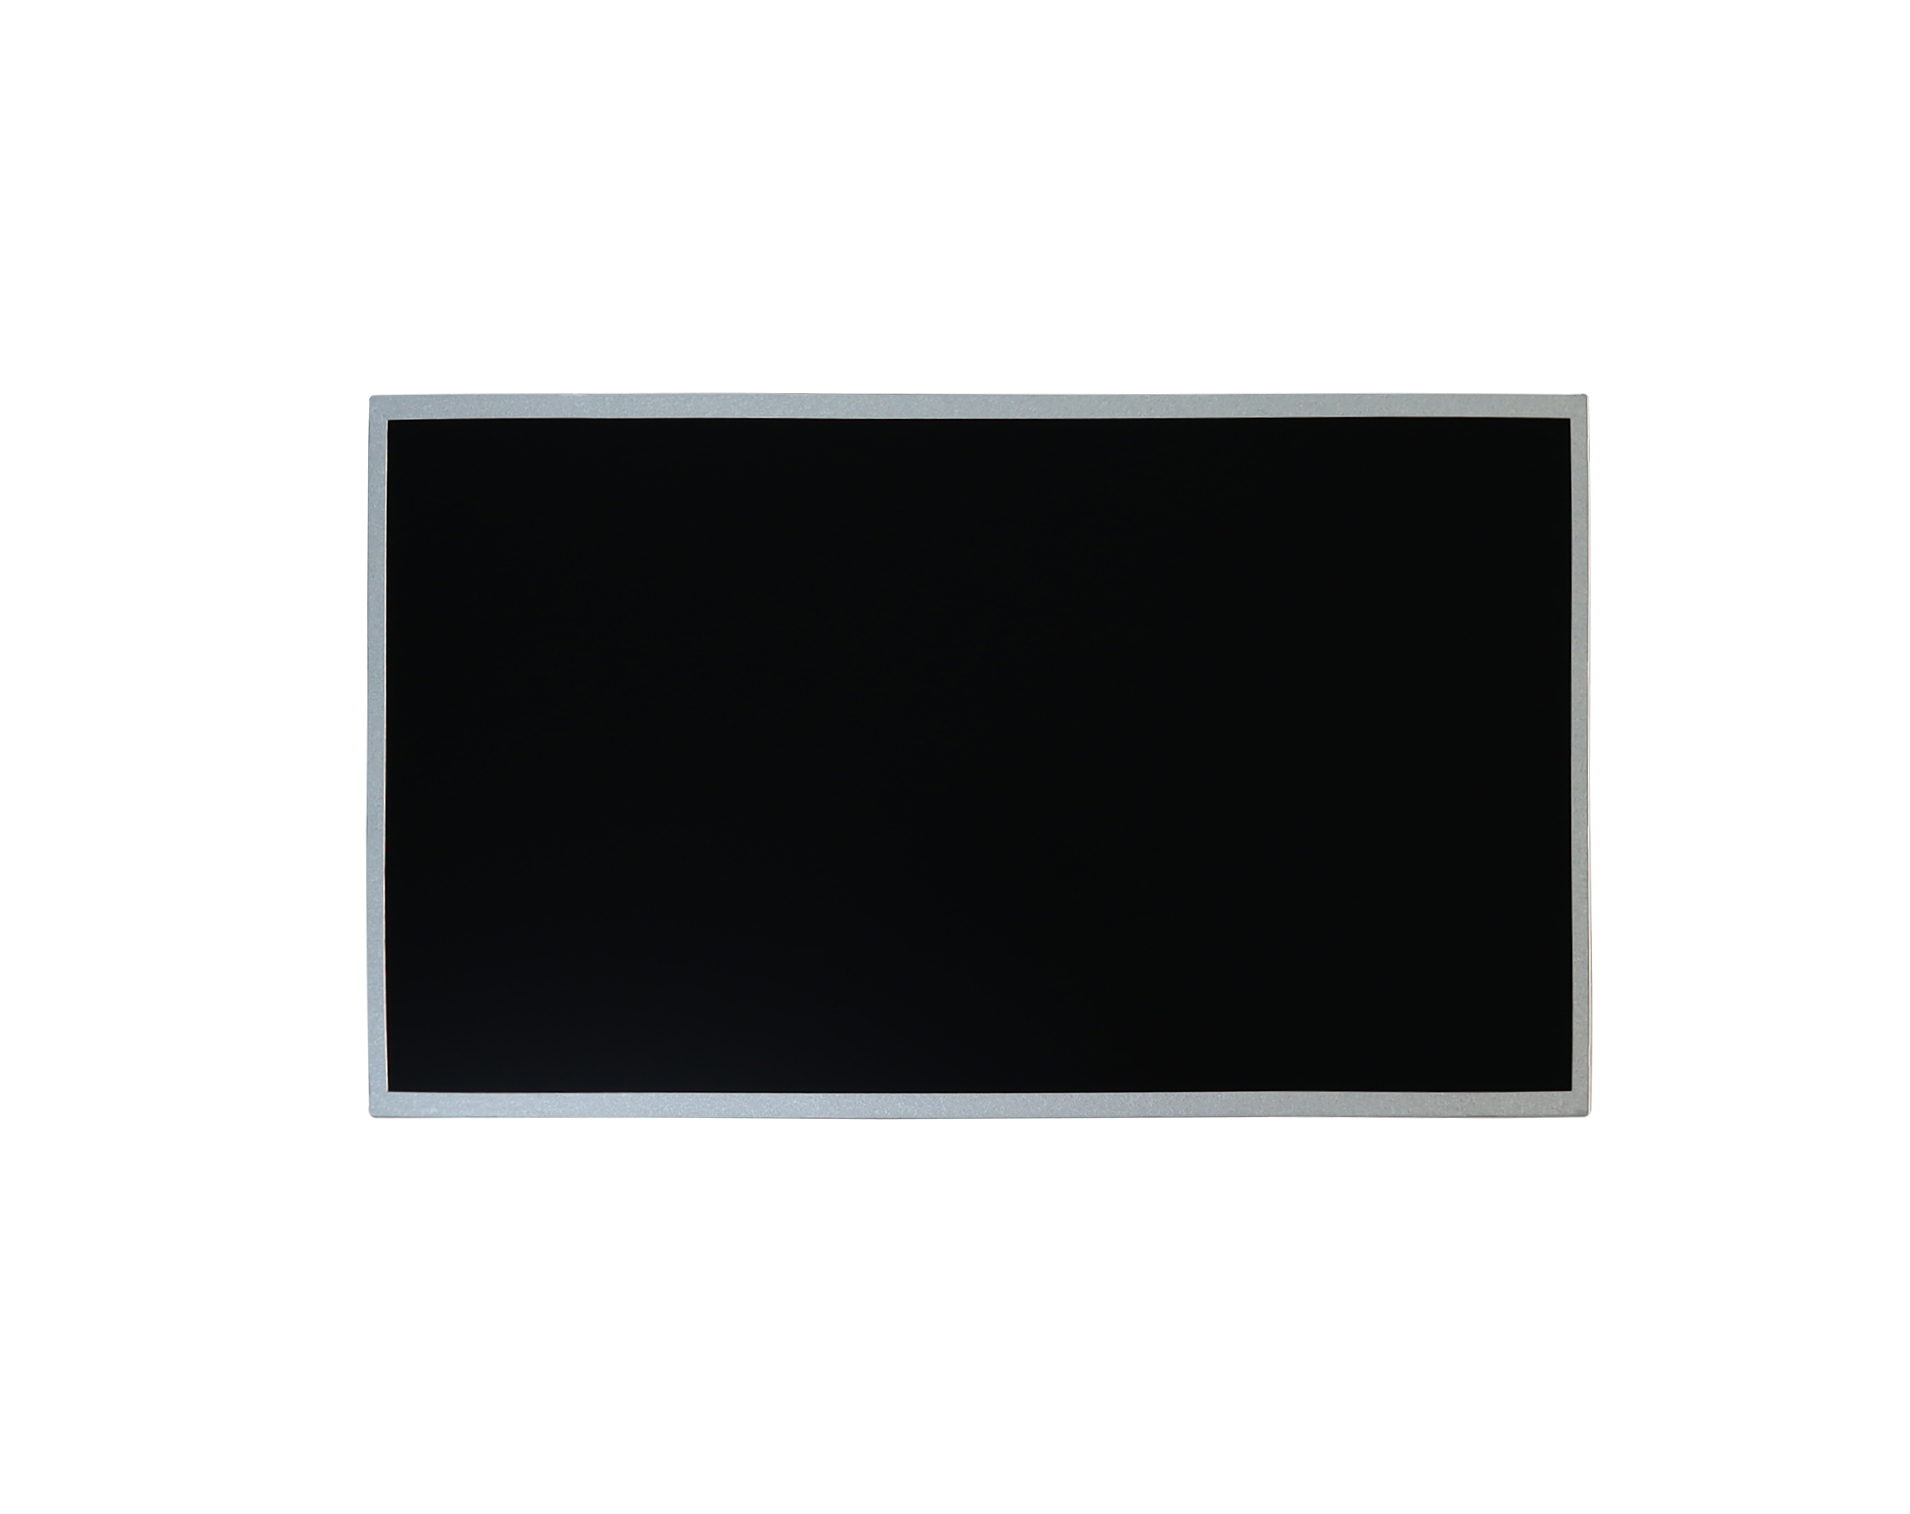 21.5 inch industrial high brightness TFT LCD panel 